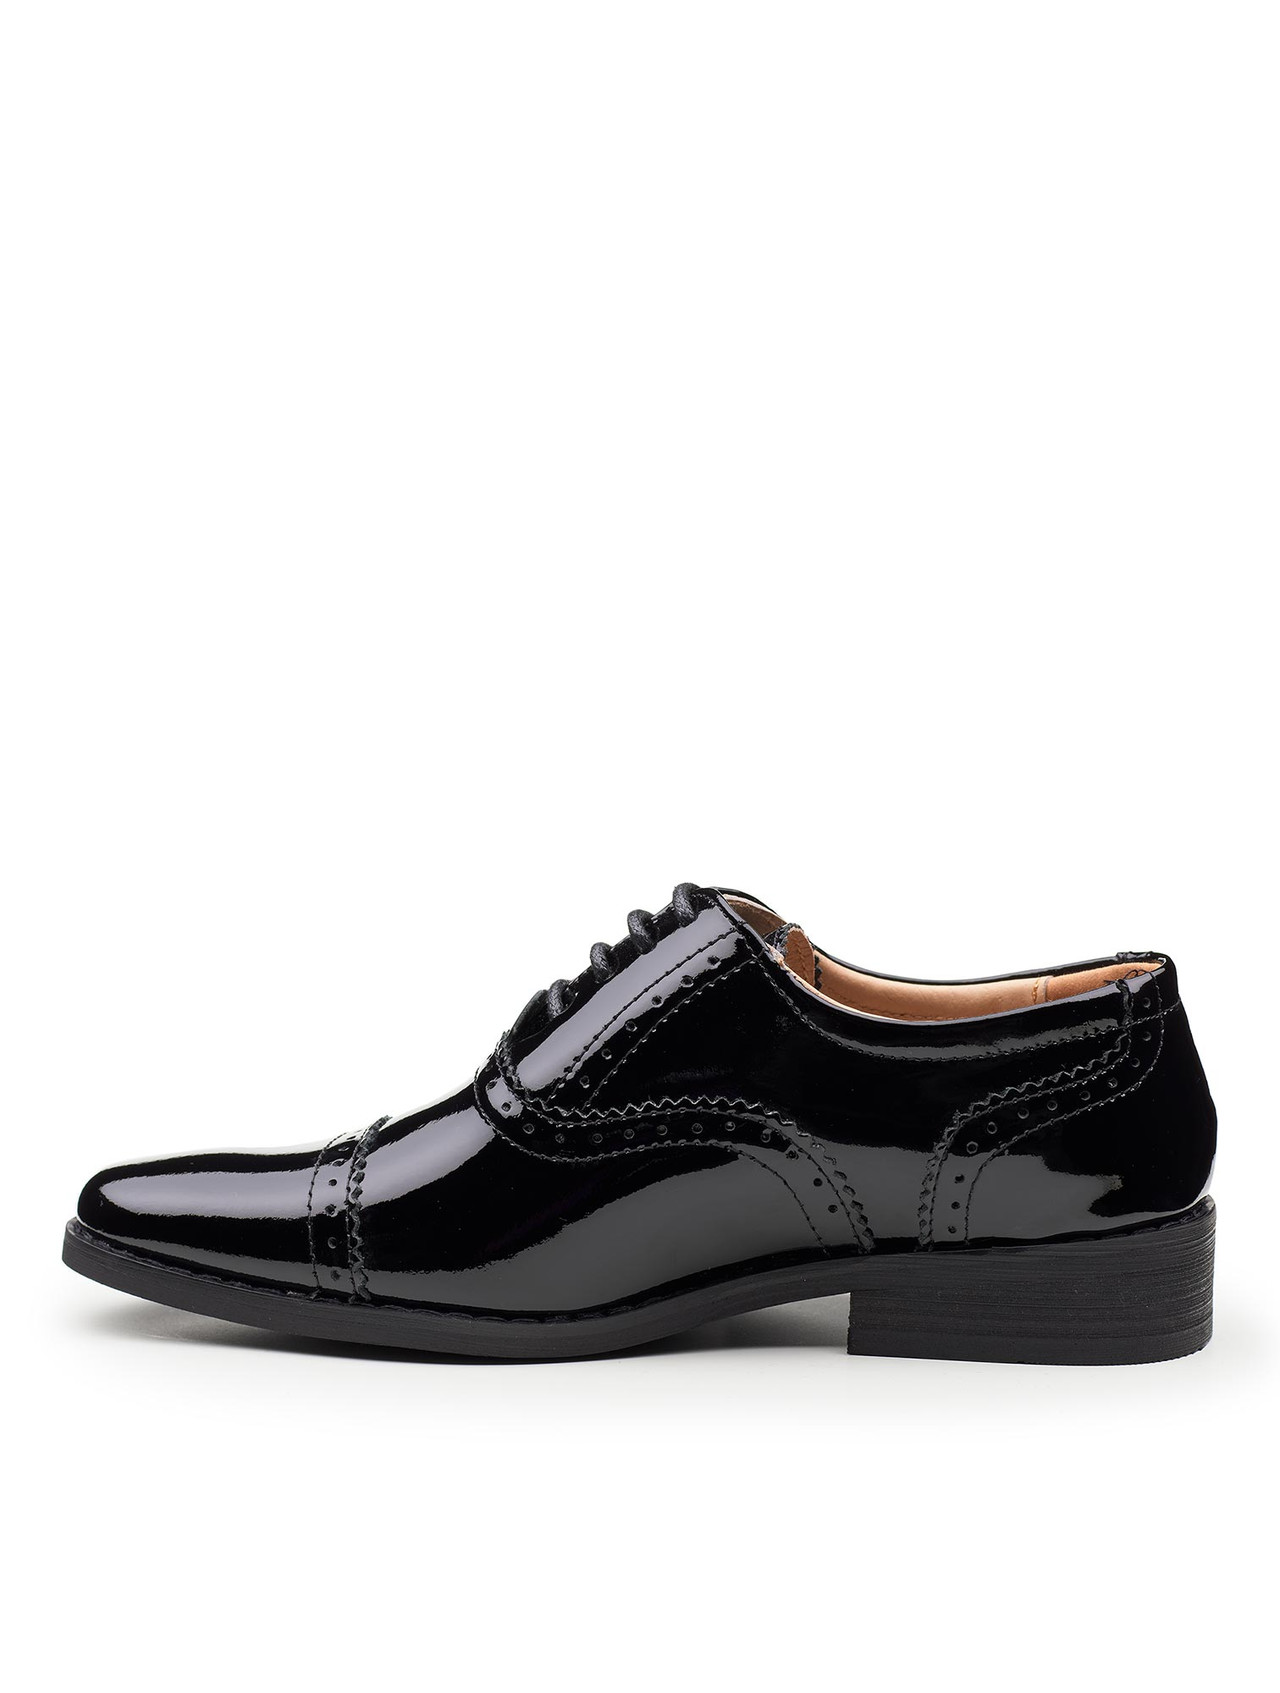 Boys black leather shoes | Boys holy communion shoe | Boys patent black ...